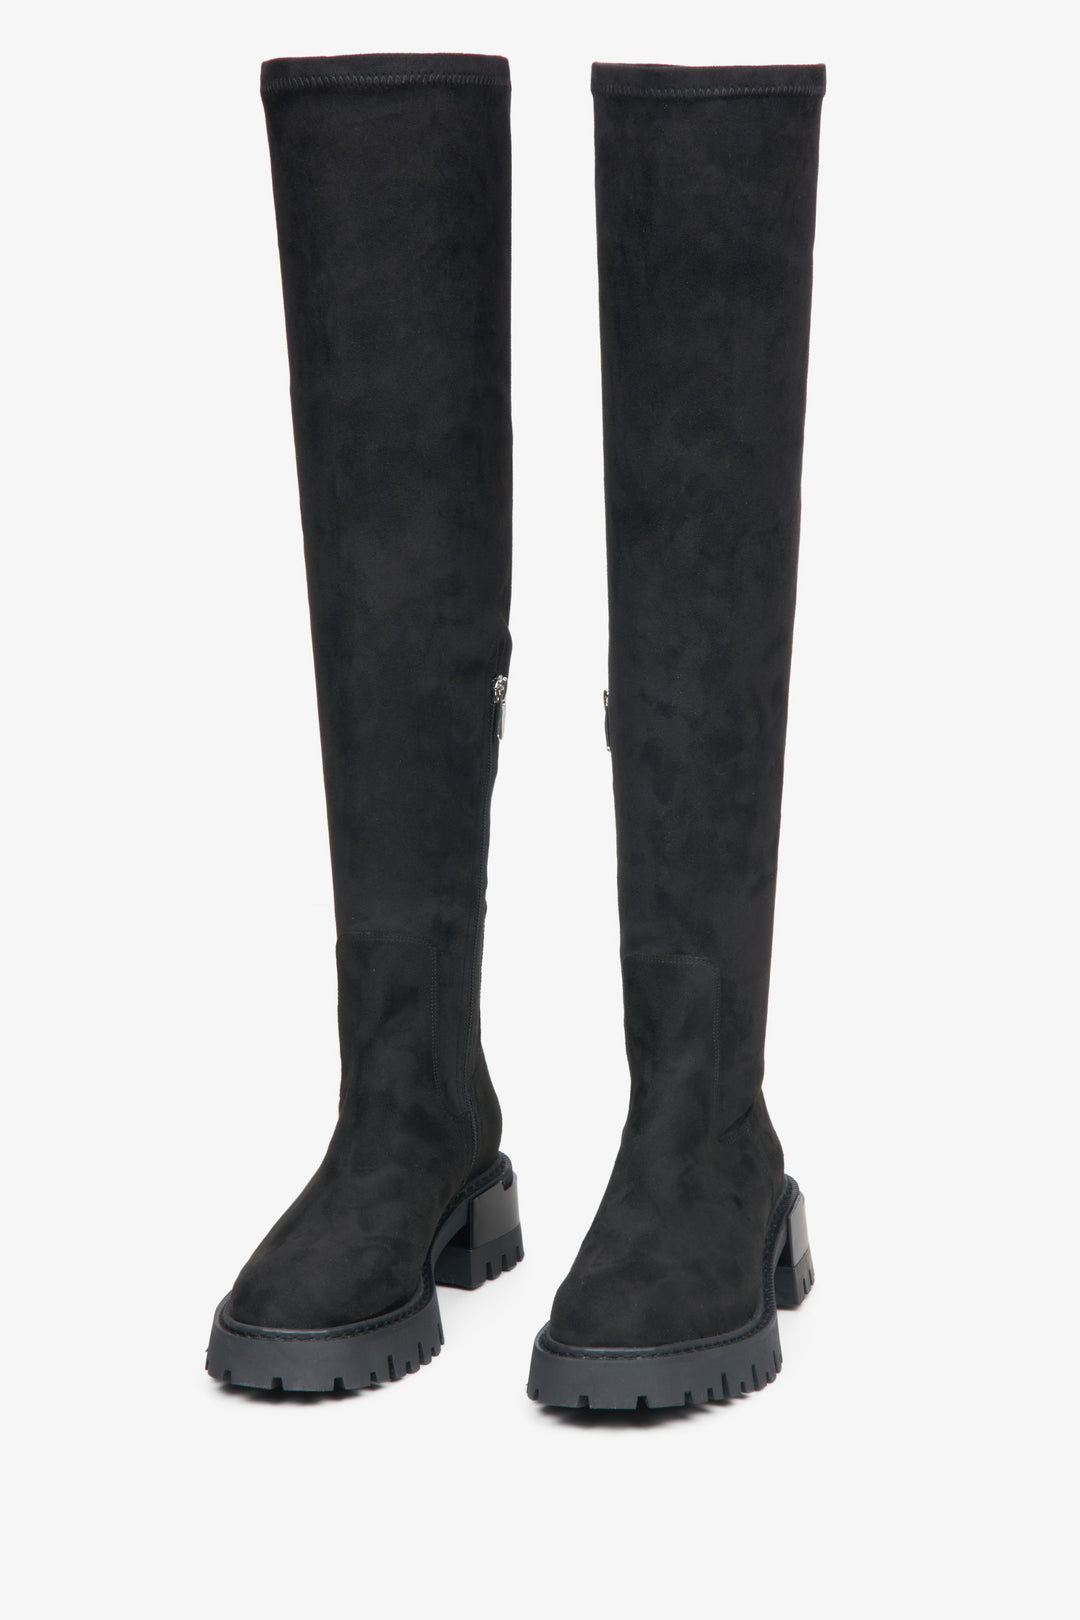 Black velour high-knee women's boots by Estro.